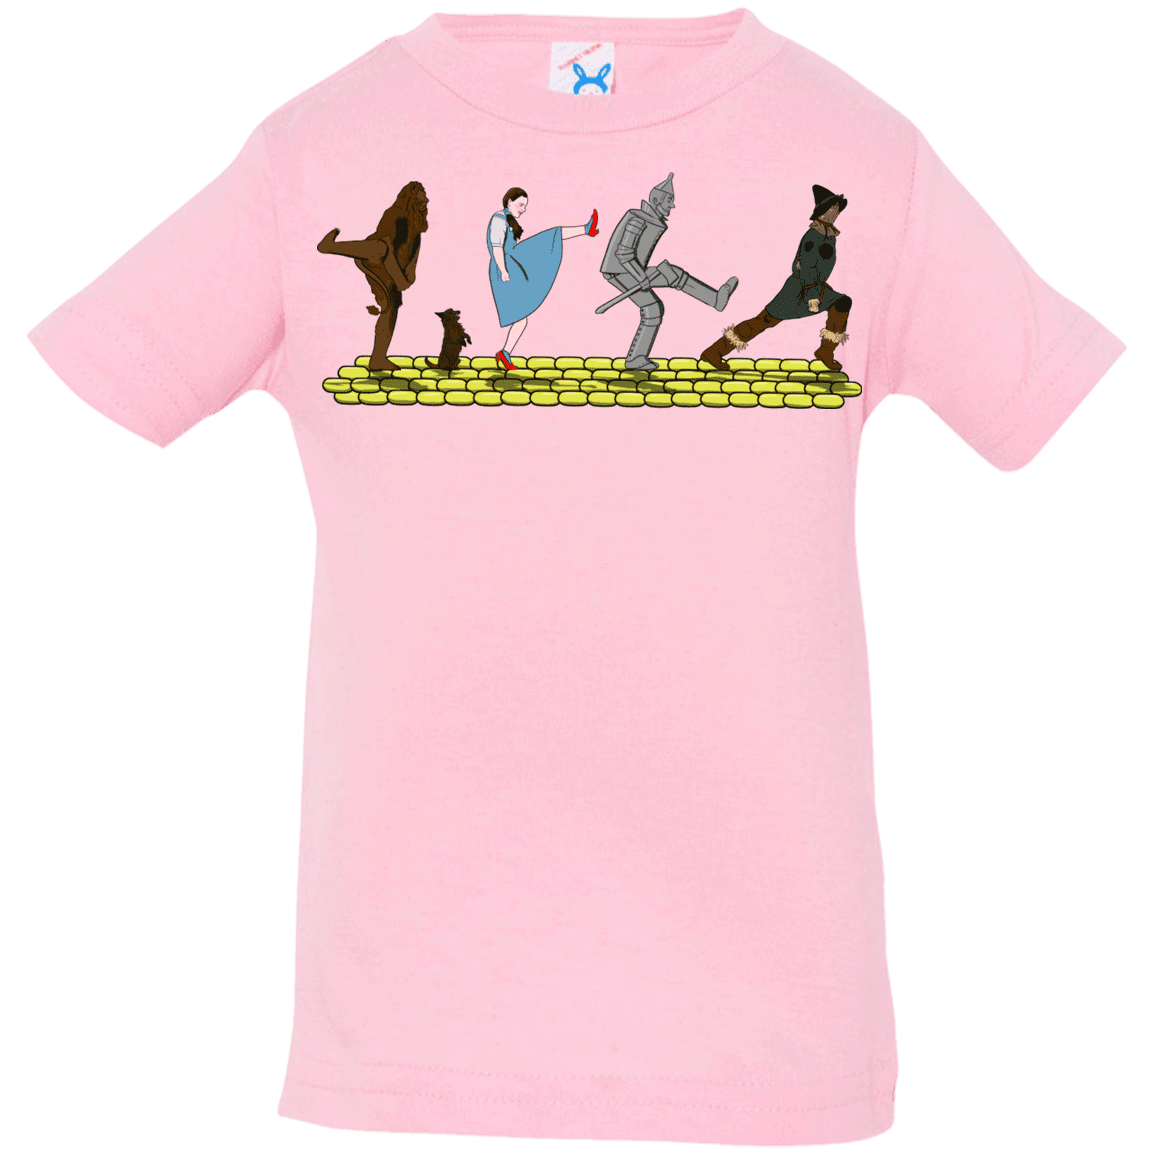 T-Shirts Pink / 6 Months Walk to Oz Infant Premium T-Shirt